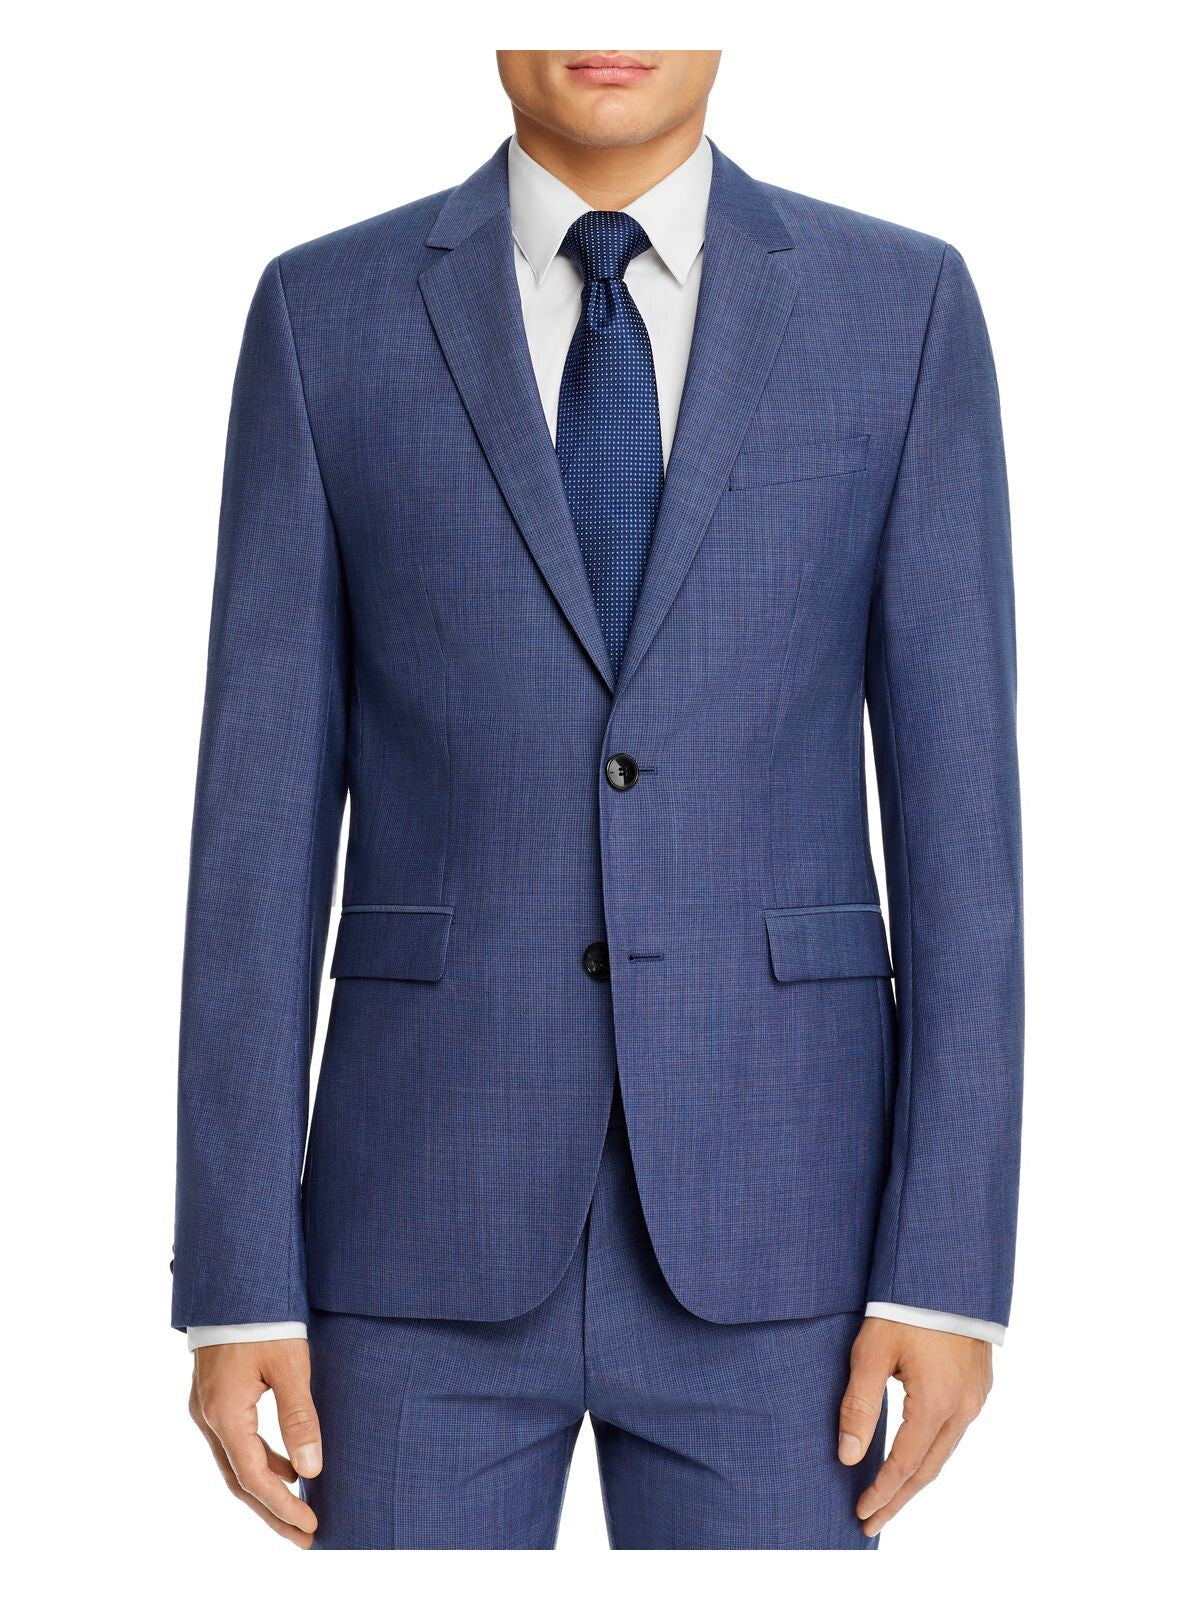 HUGO BOSS Mens Blue Single Breasted, Wool Blend Suit Jacket 42R